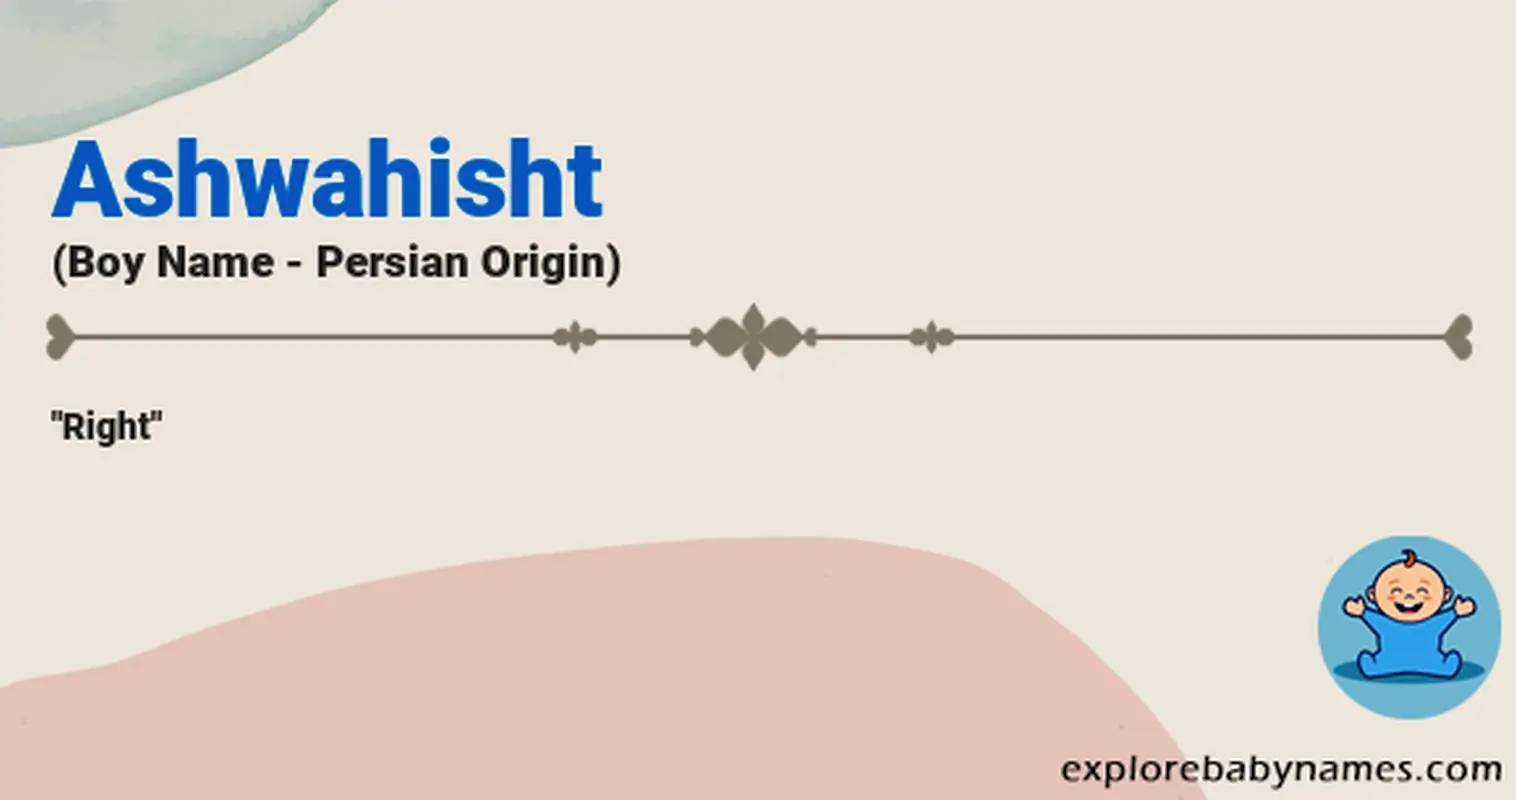 Meaning of Ashwahisht